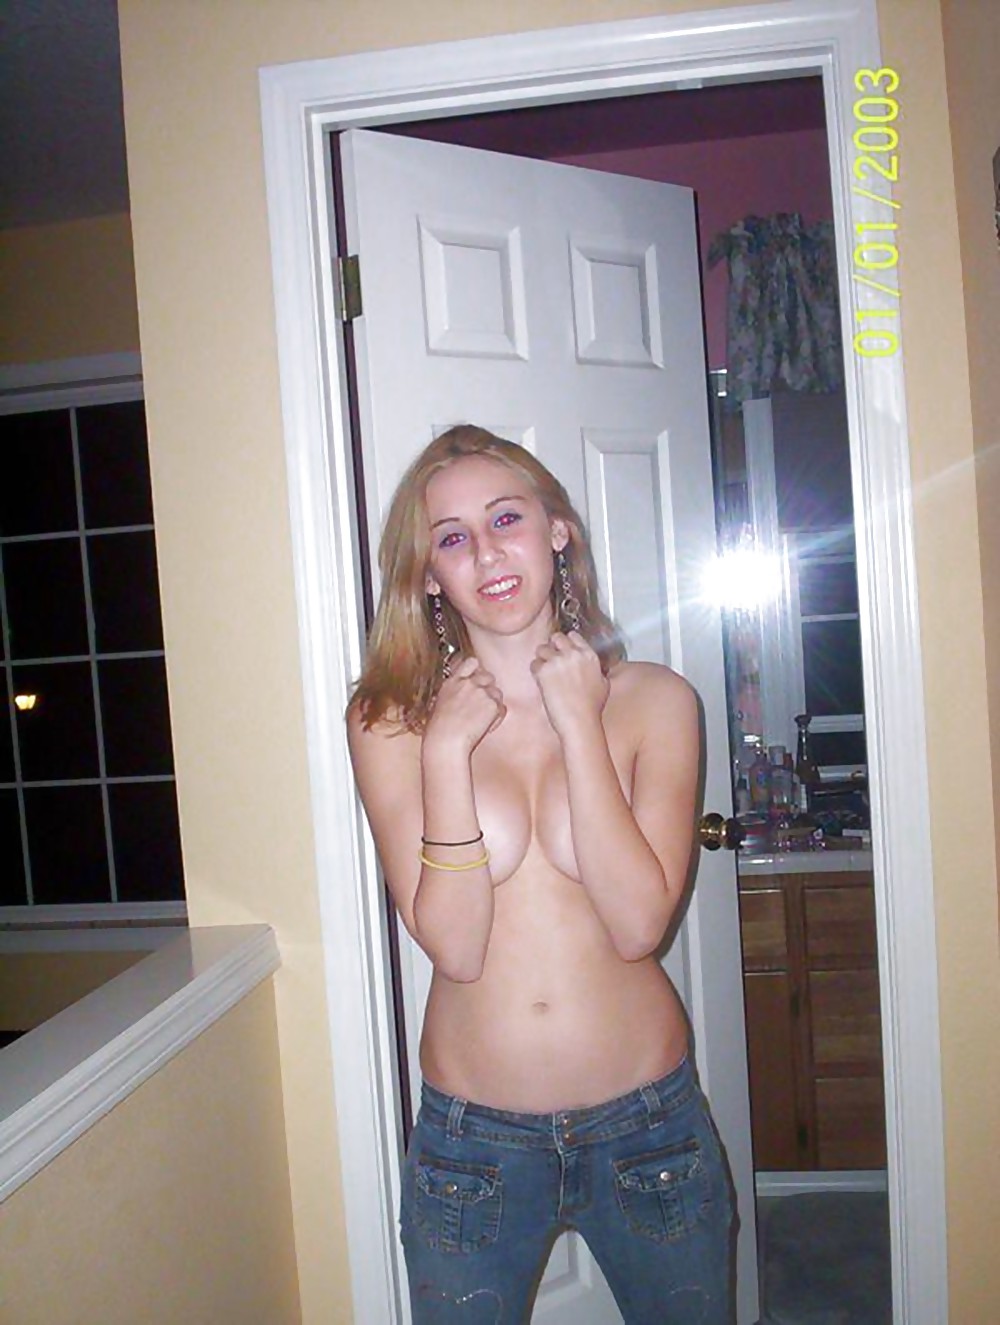 Free Embarrassed Nude Girls 13 photos